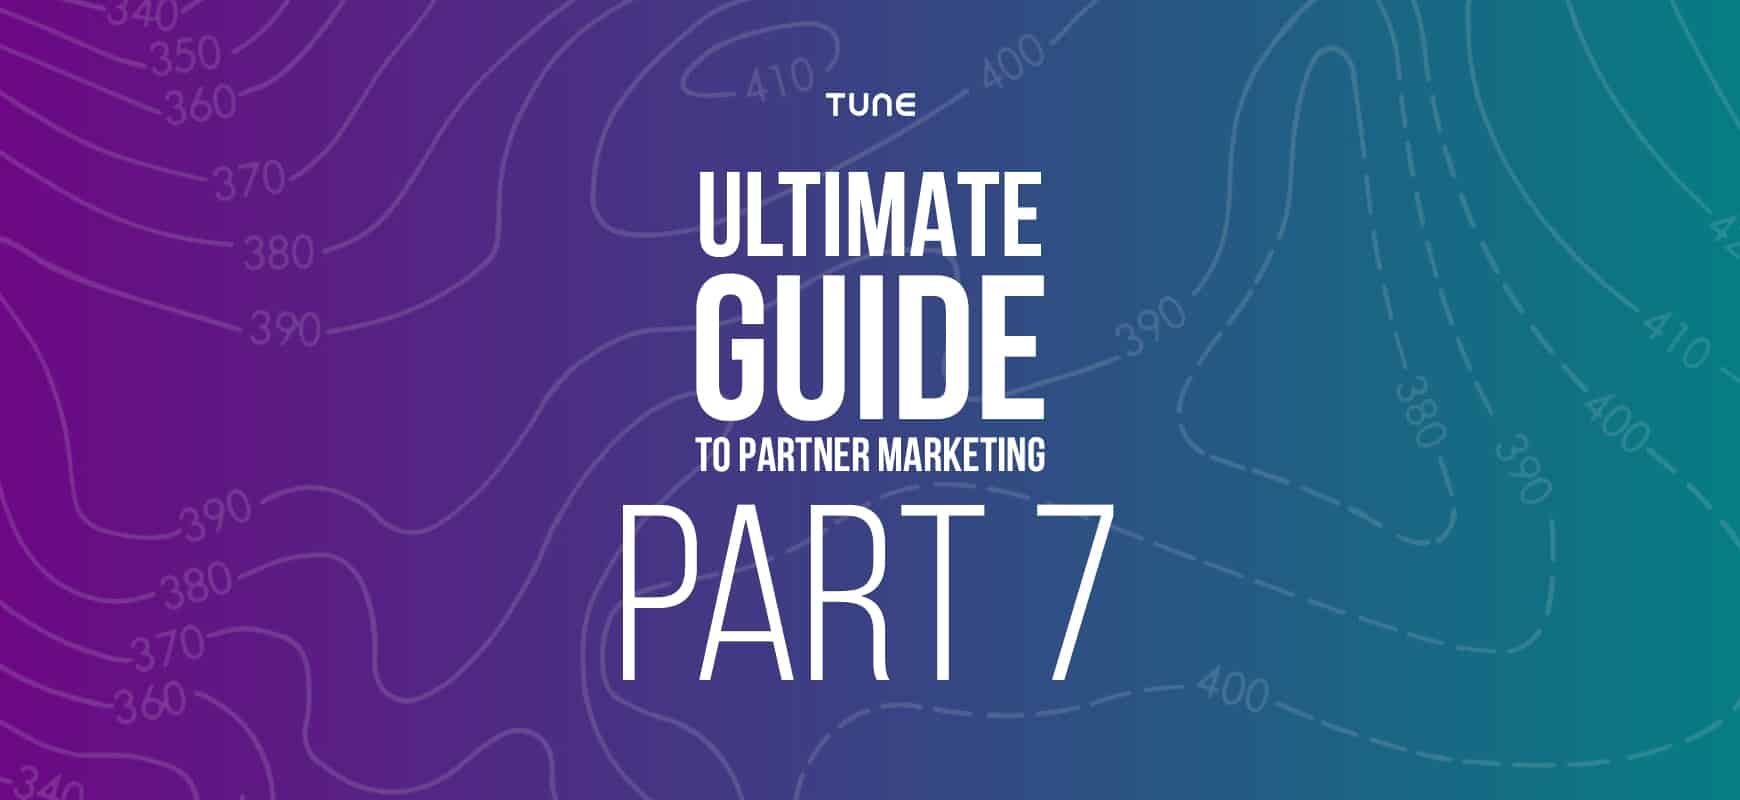 Ultimate Guide to Partner Marketing, Part 7 - Partner Marketing Guide